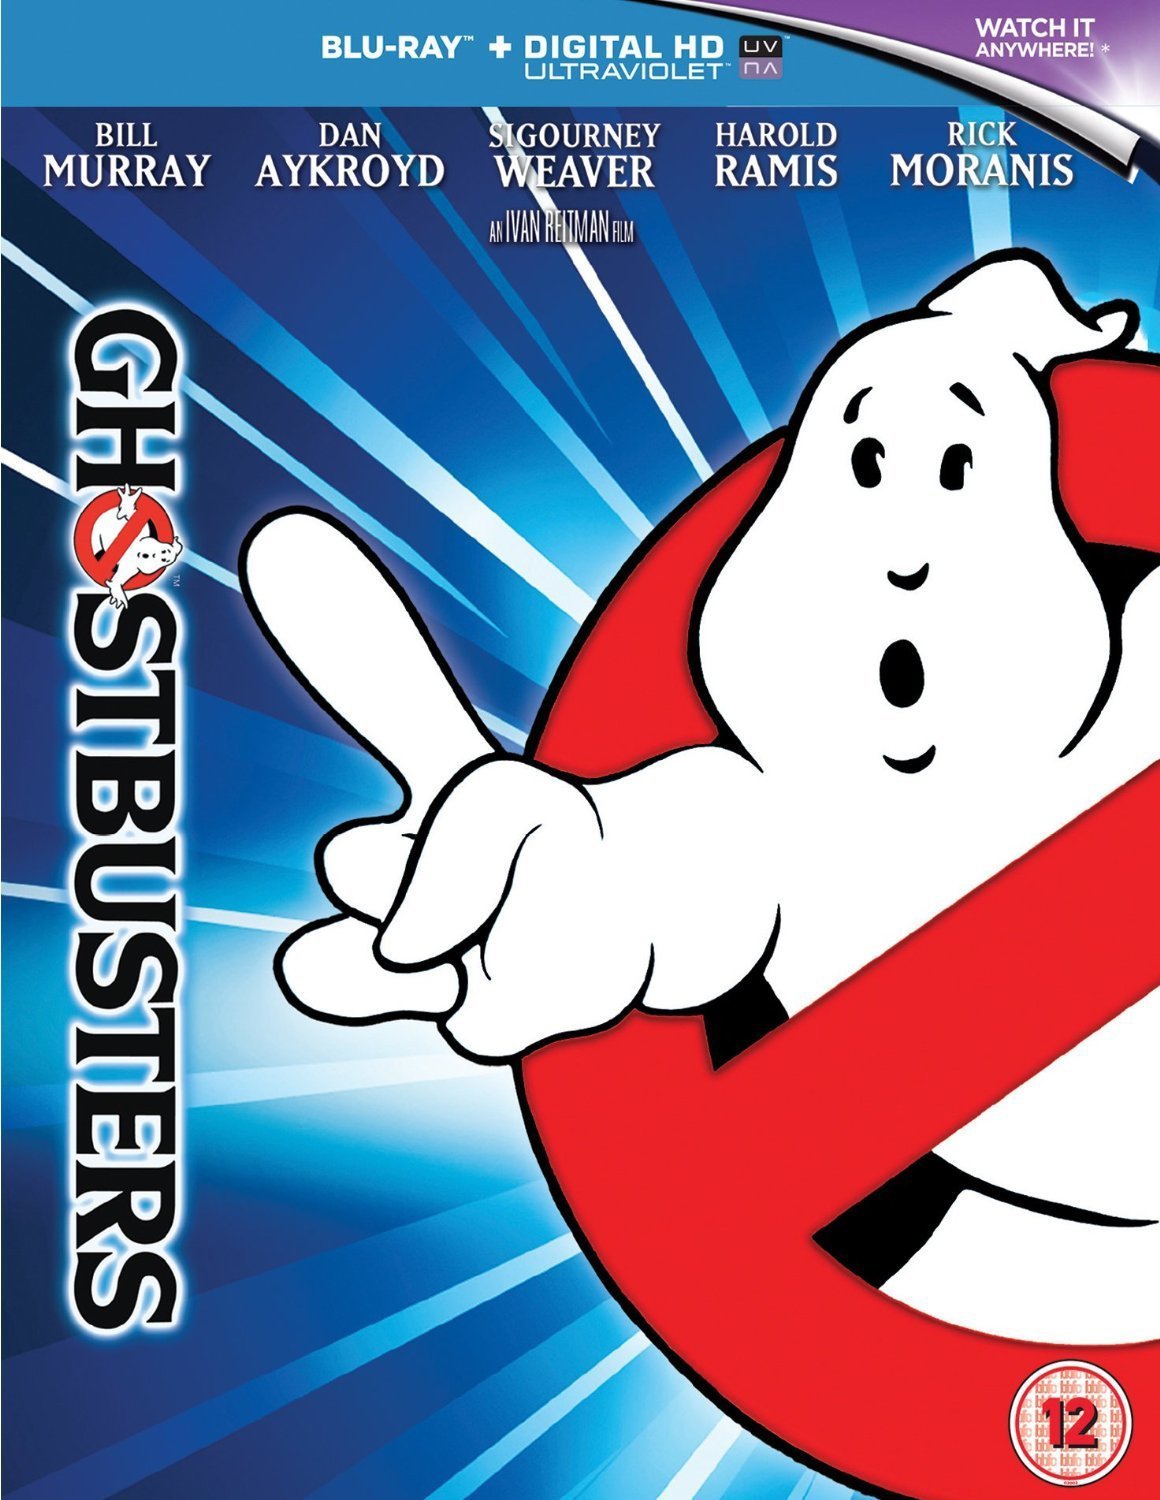 Ghostbusters (Blu-Ray)